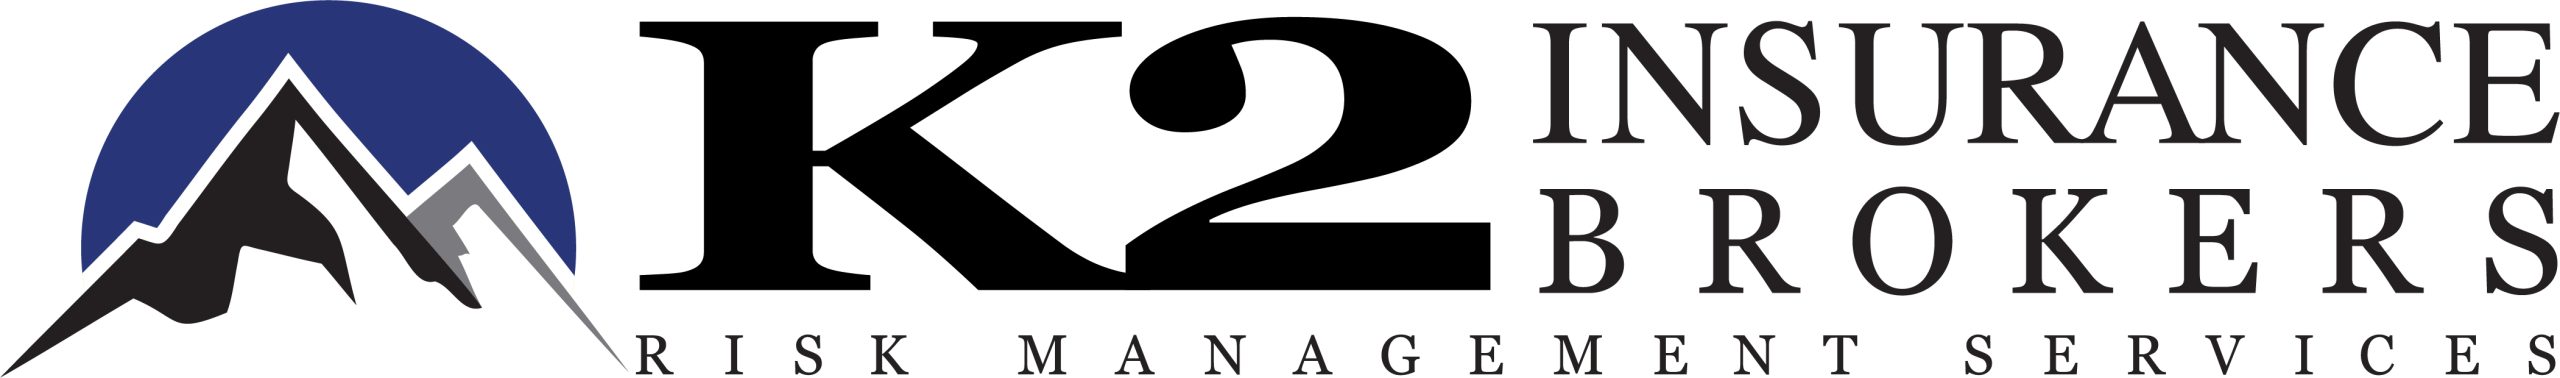 K2 Insurance Brokers & Risk Management